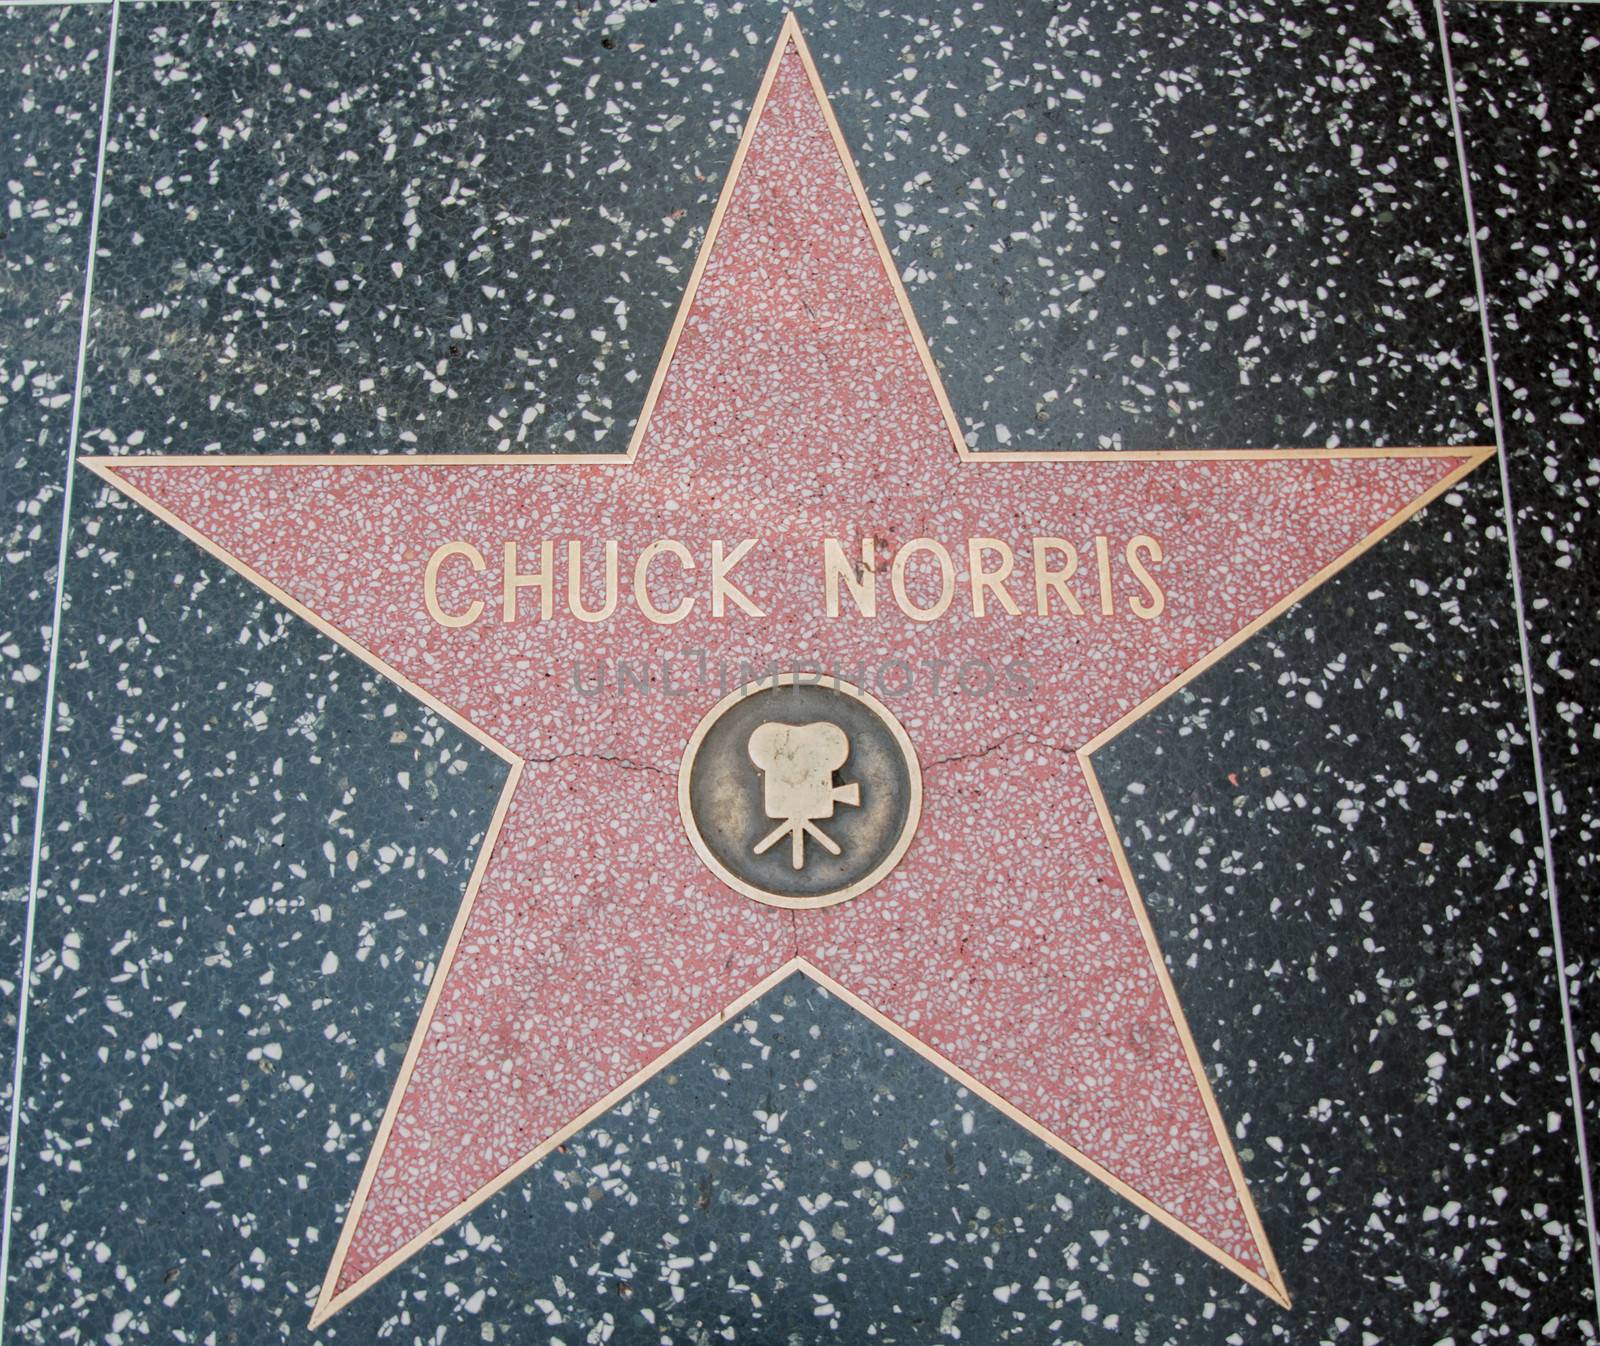 Chuck Norris Hollywood Star on street Los Angeles 2013